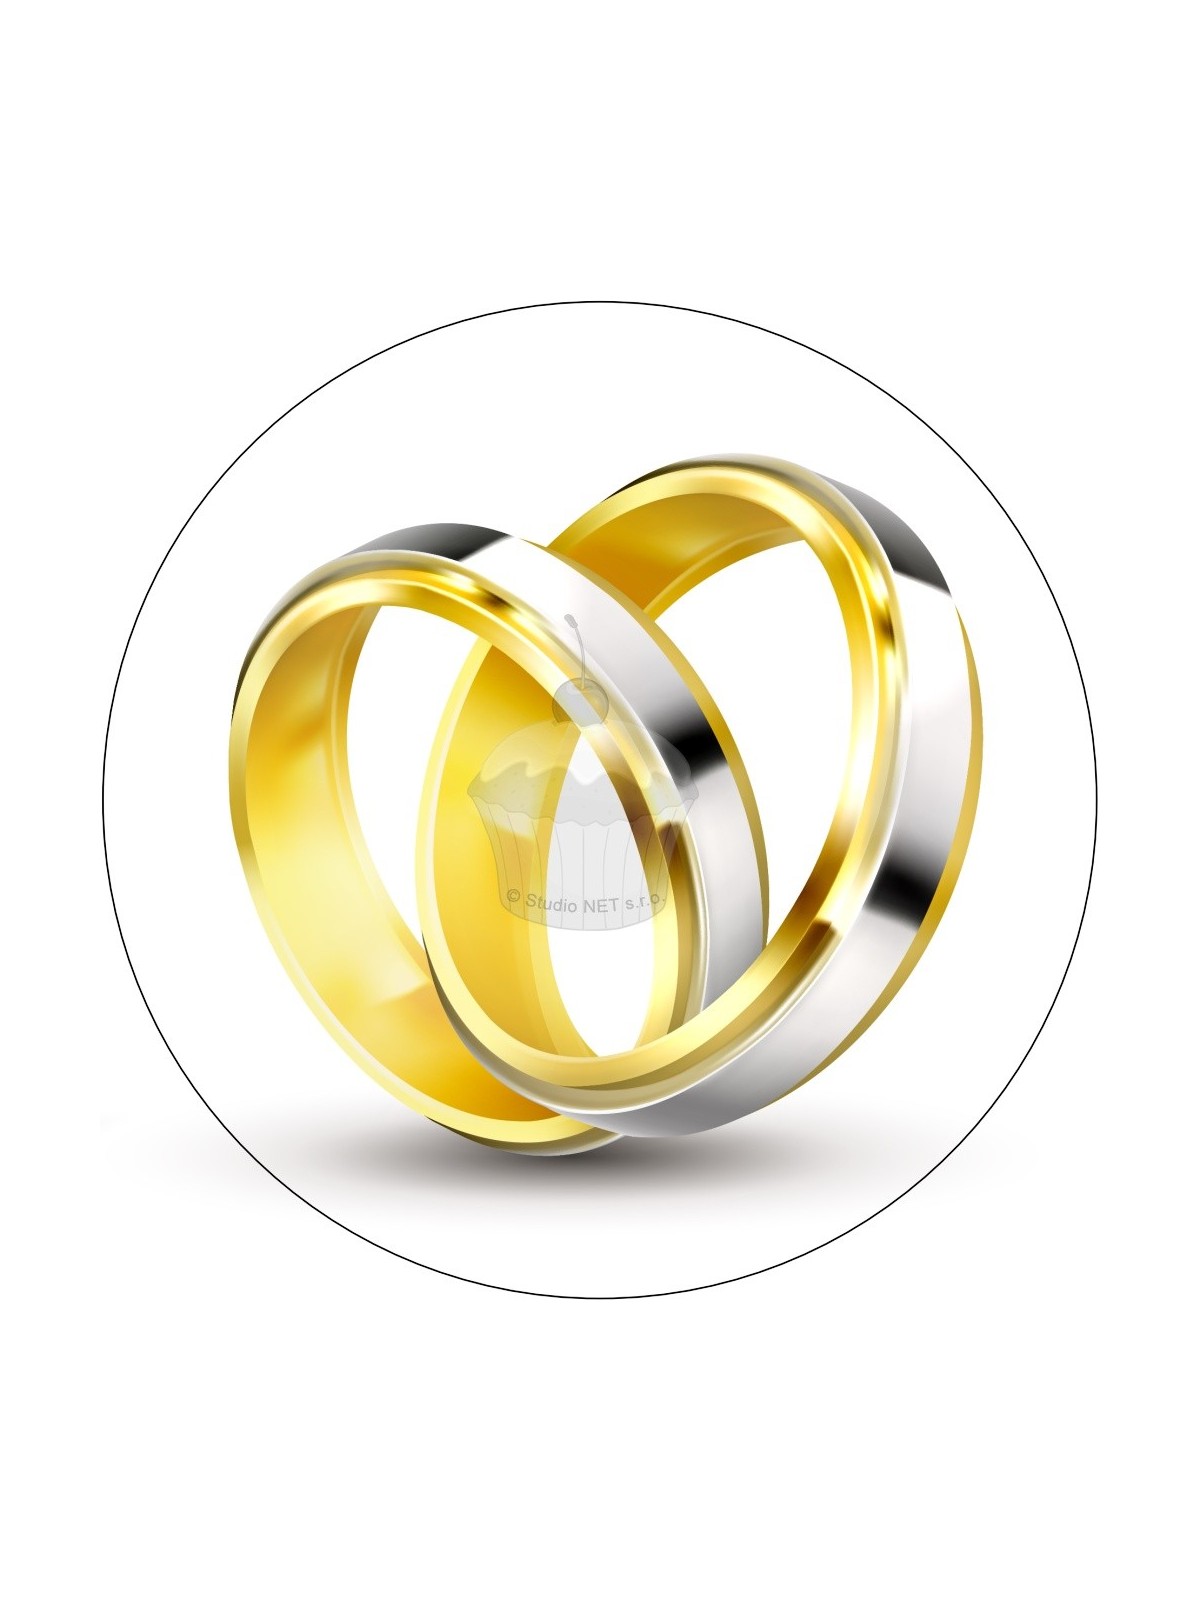 Edible paper "wedding rings" A4